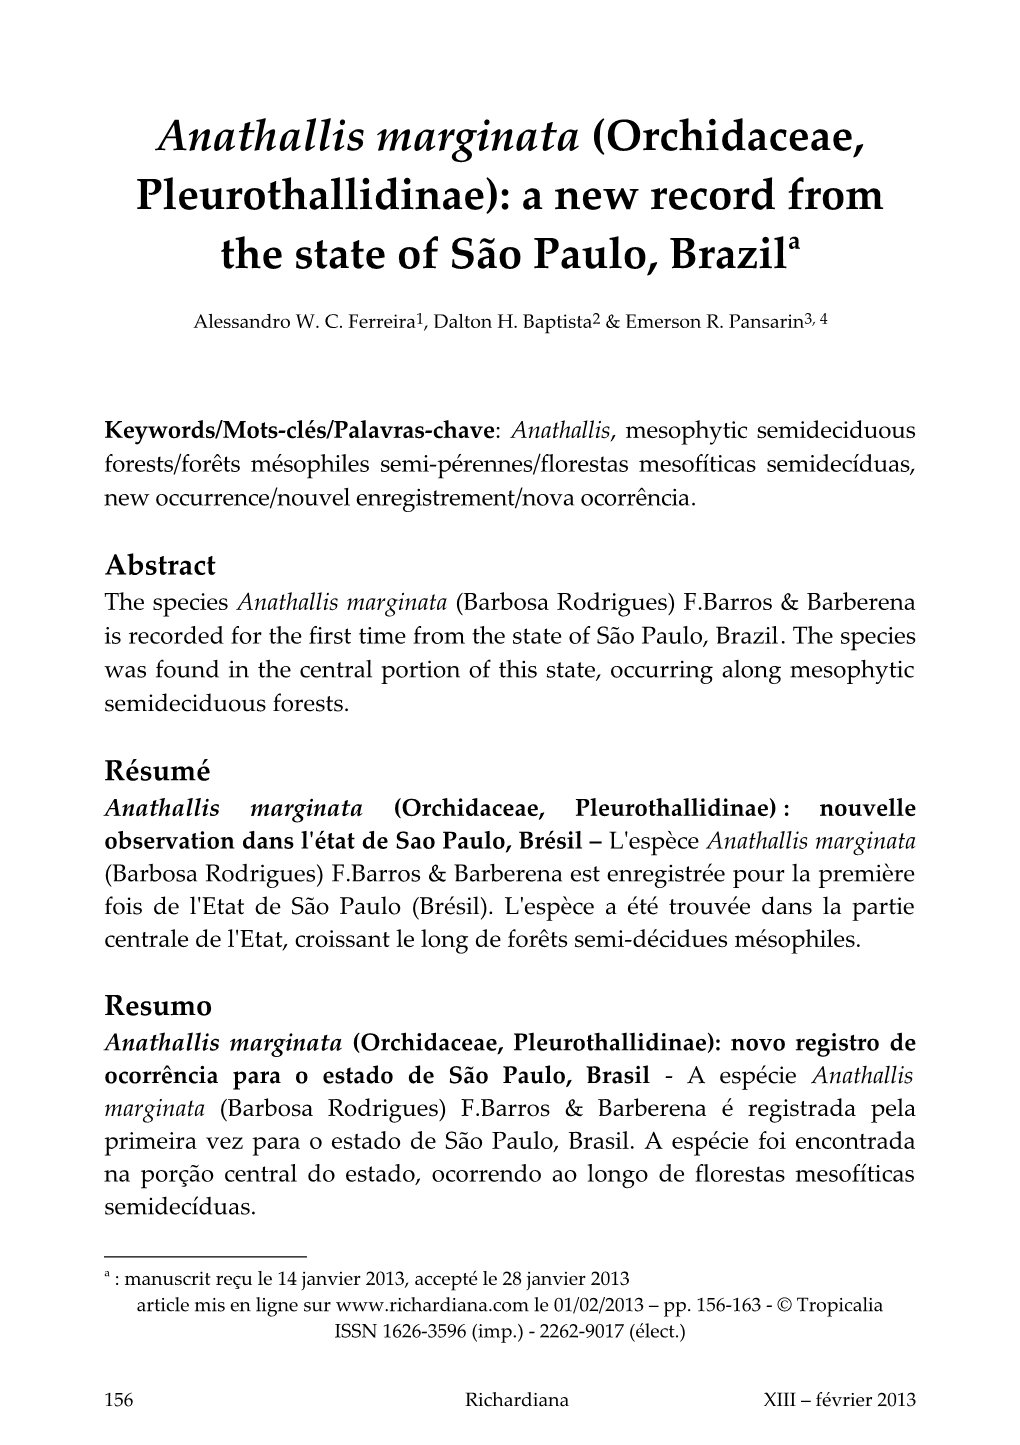 Anathallis Marginata (Orchidaceae, Pleurothallidinae): a New Record from the State of São Paulo, Brazila